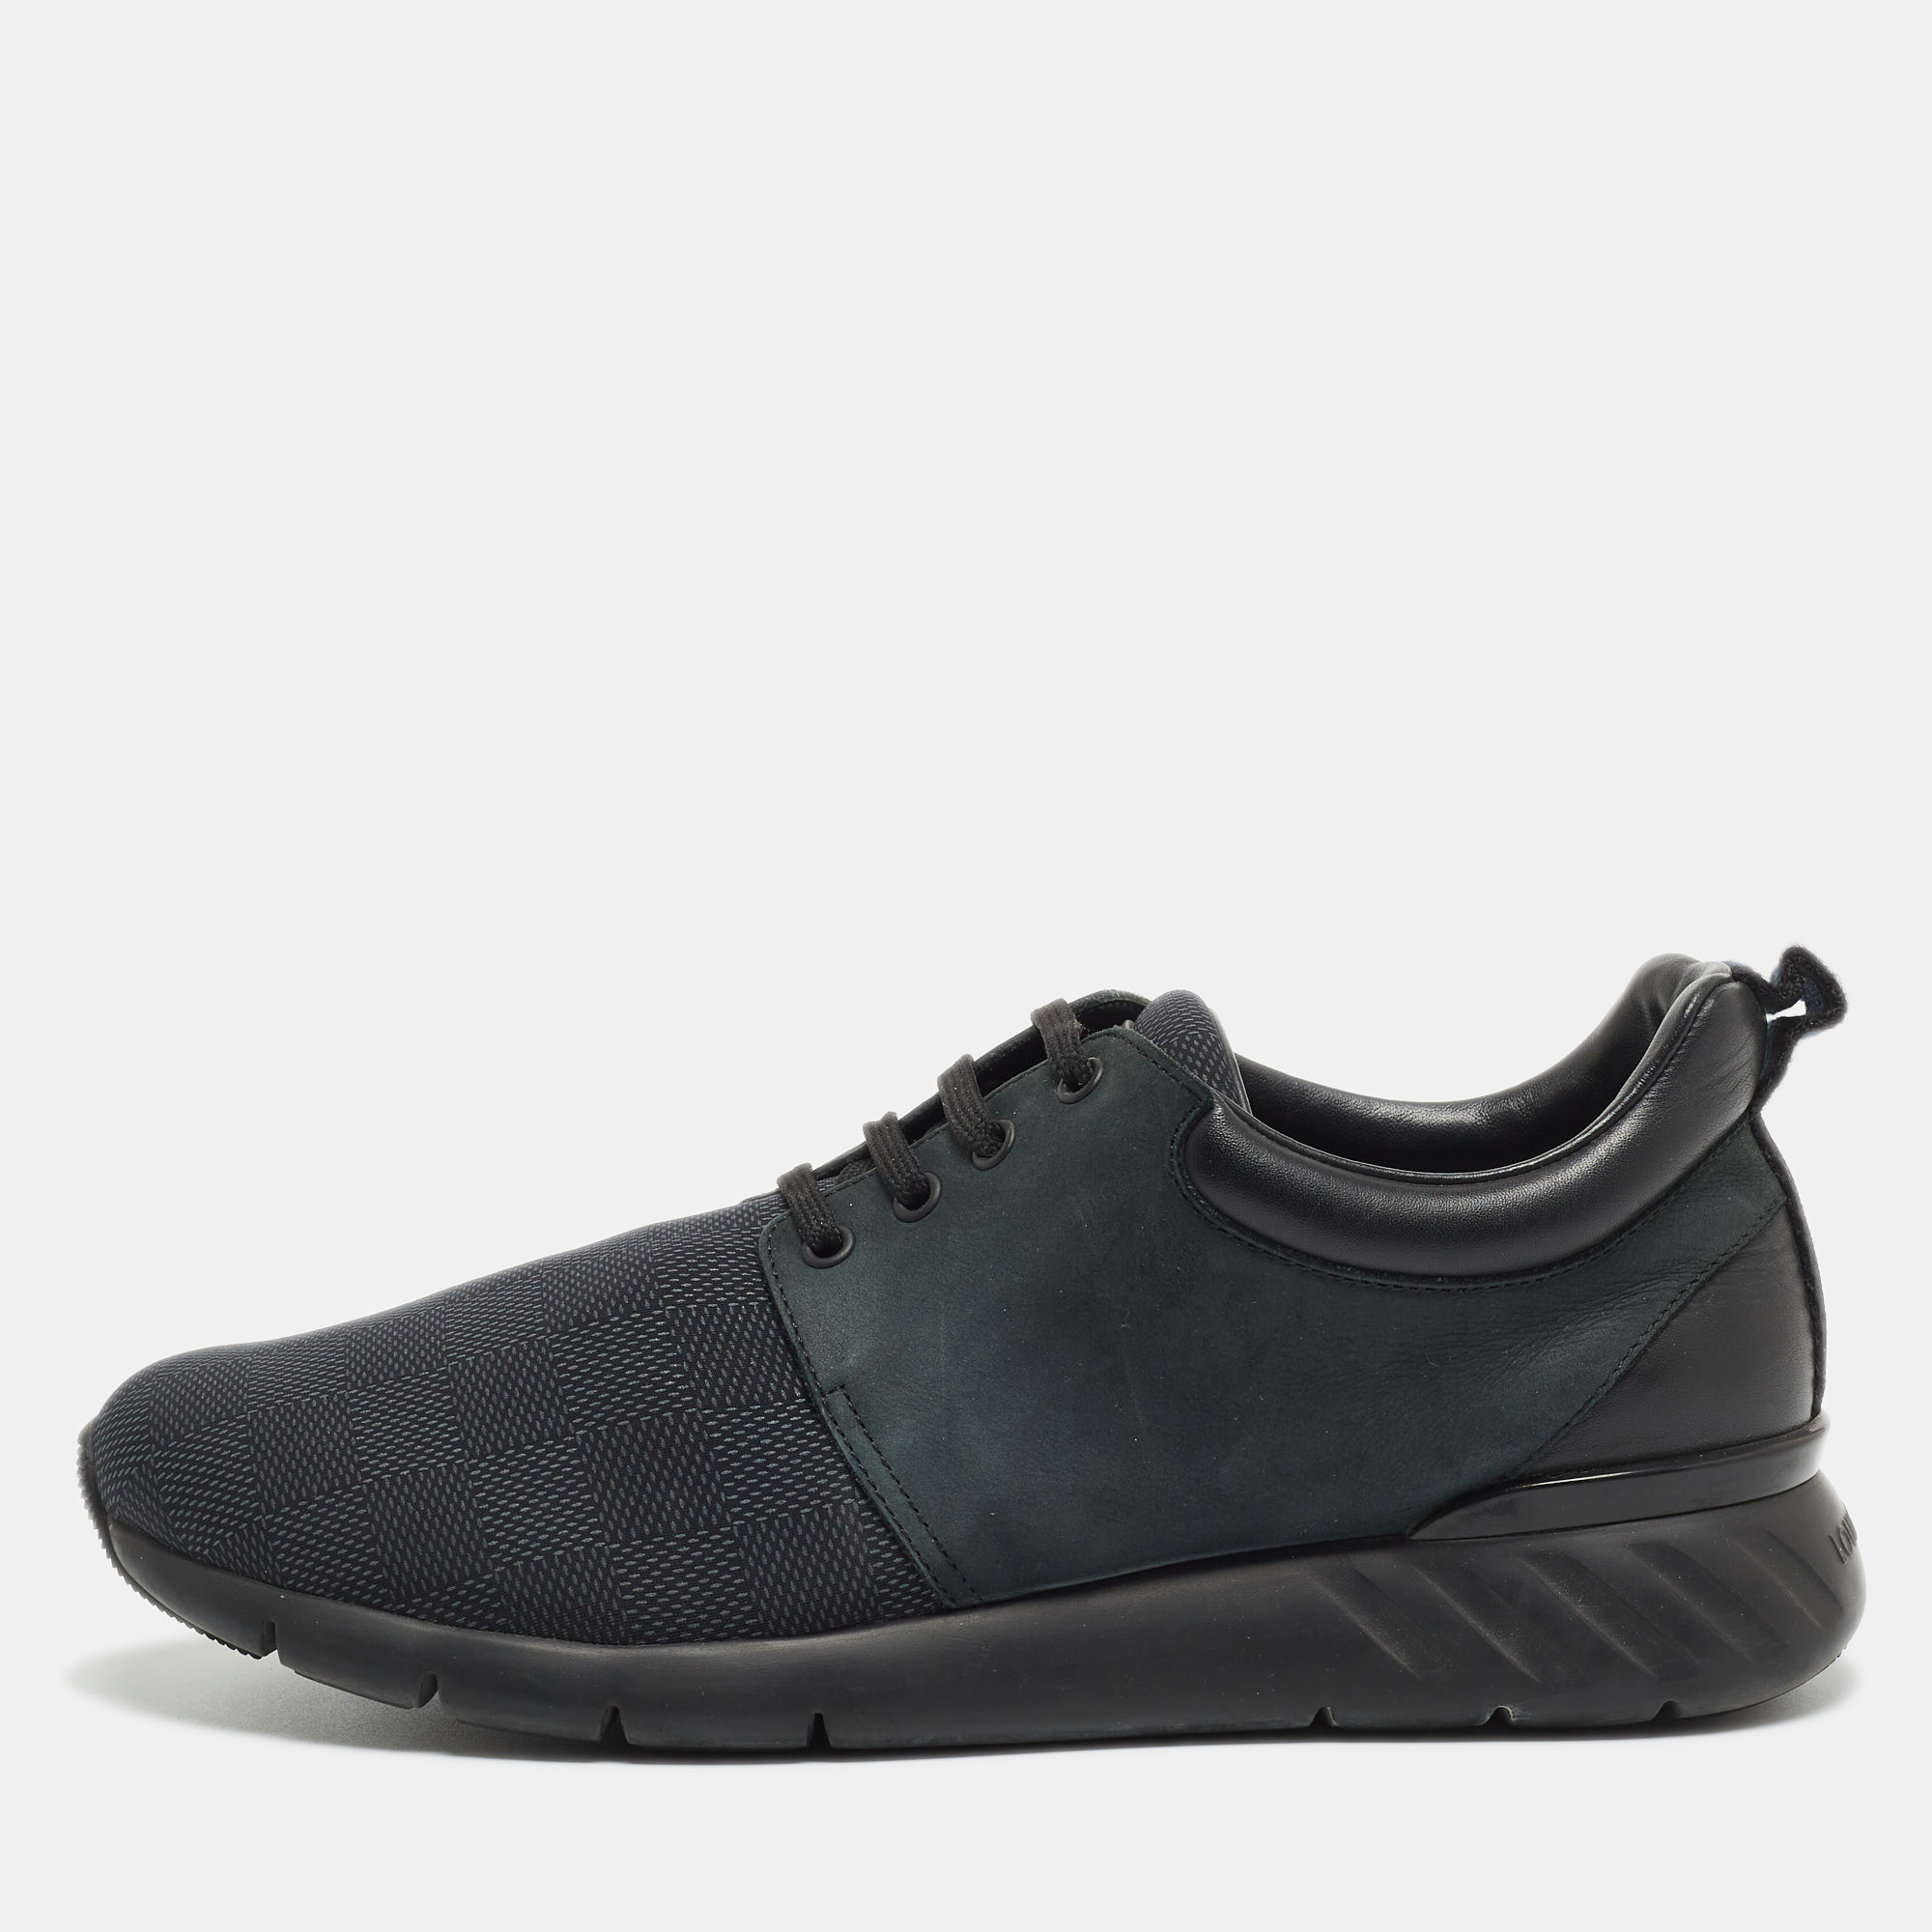 Louis Vuitton Black/Green Leather And Nylon Fastlane Sneakers Size 41